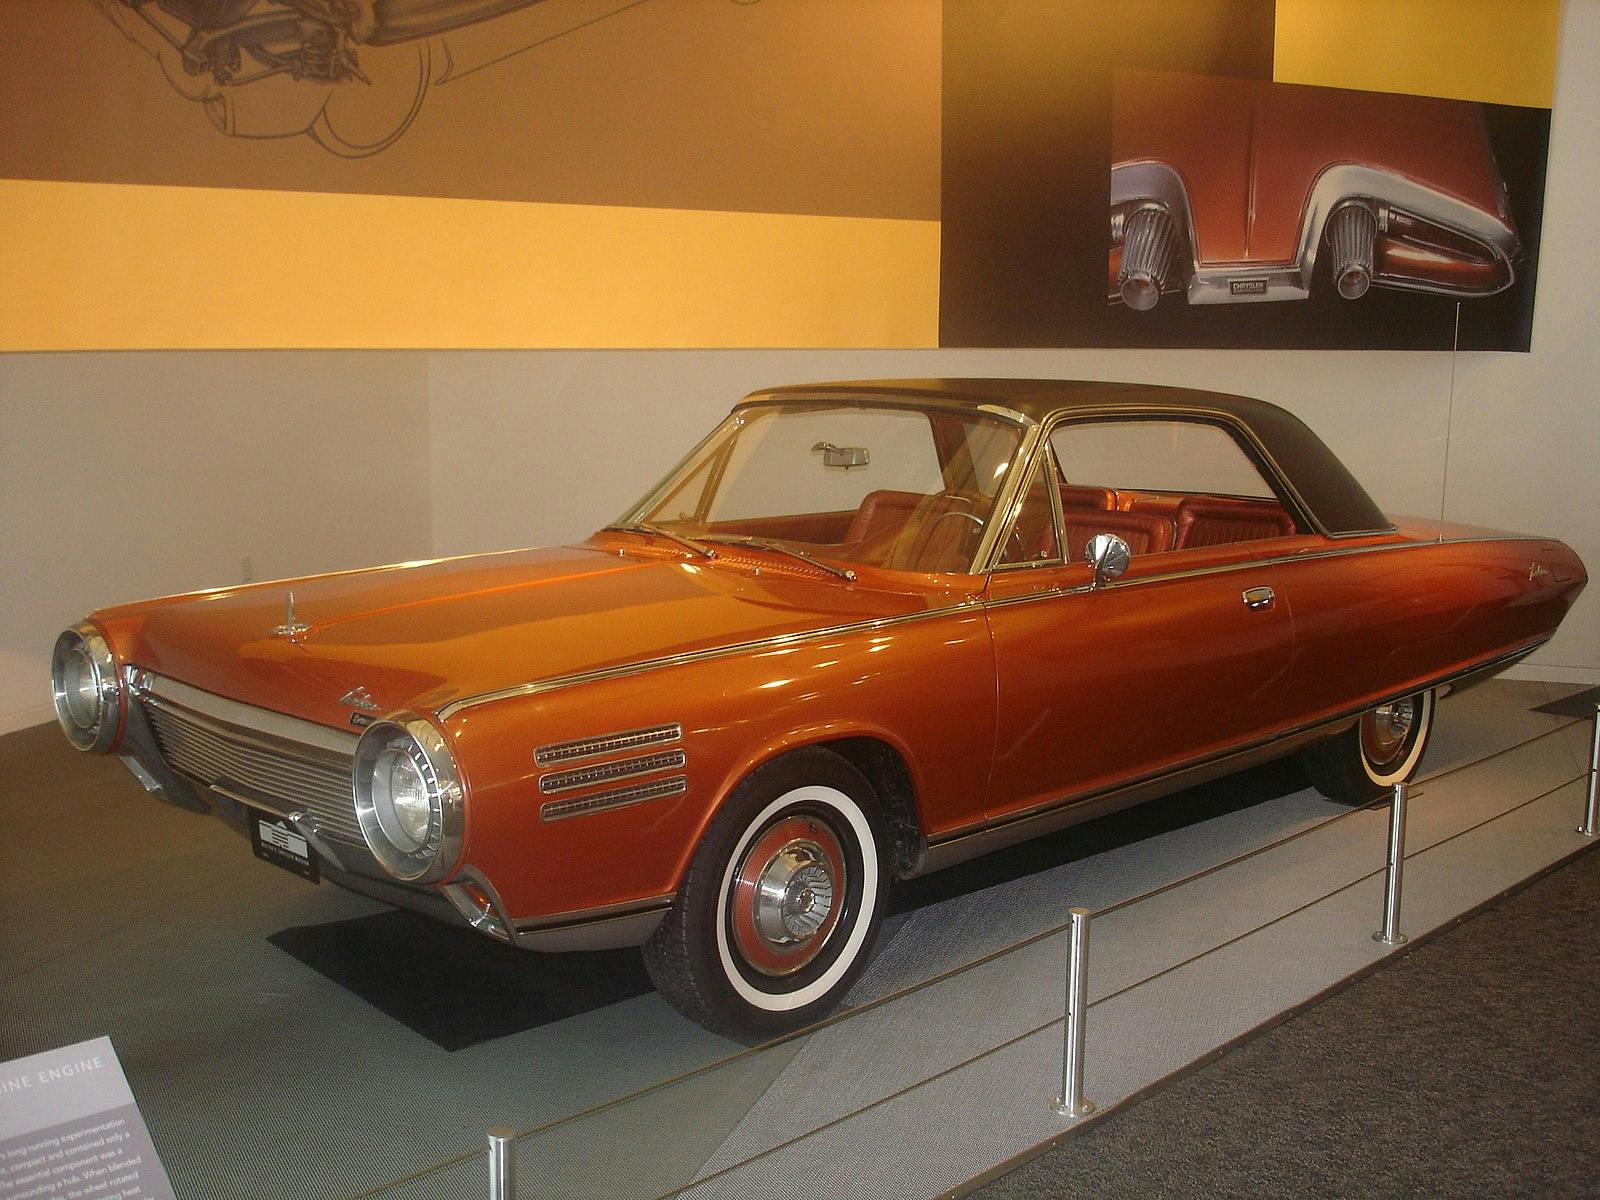 1963 Chrysler Turbine Car at the Walter P. Chrysler Museum